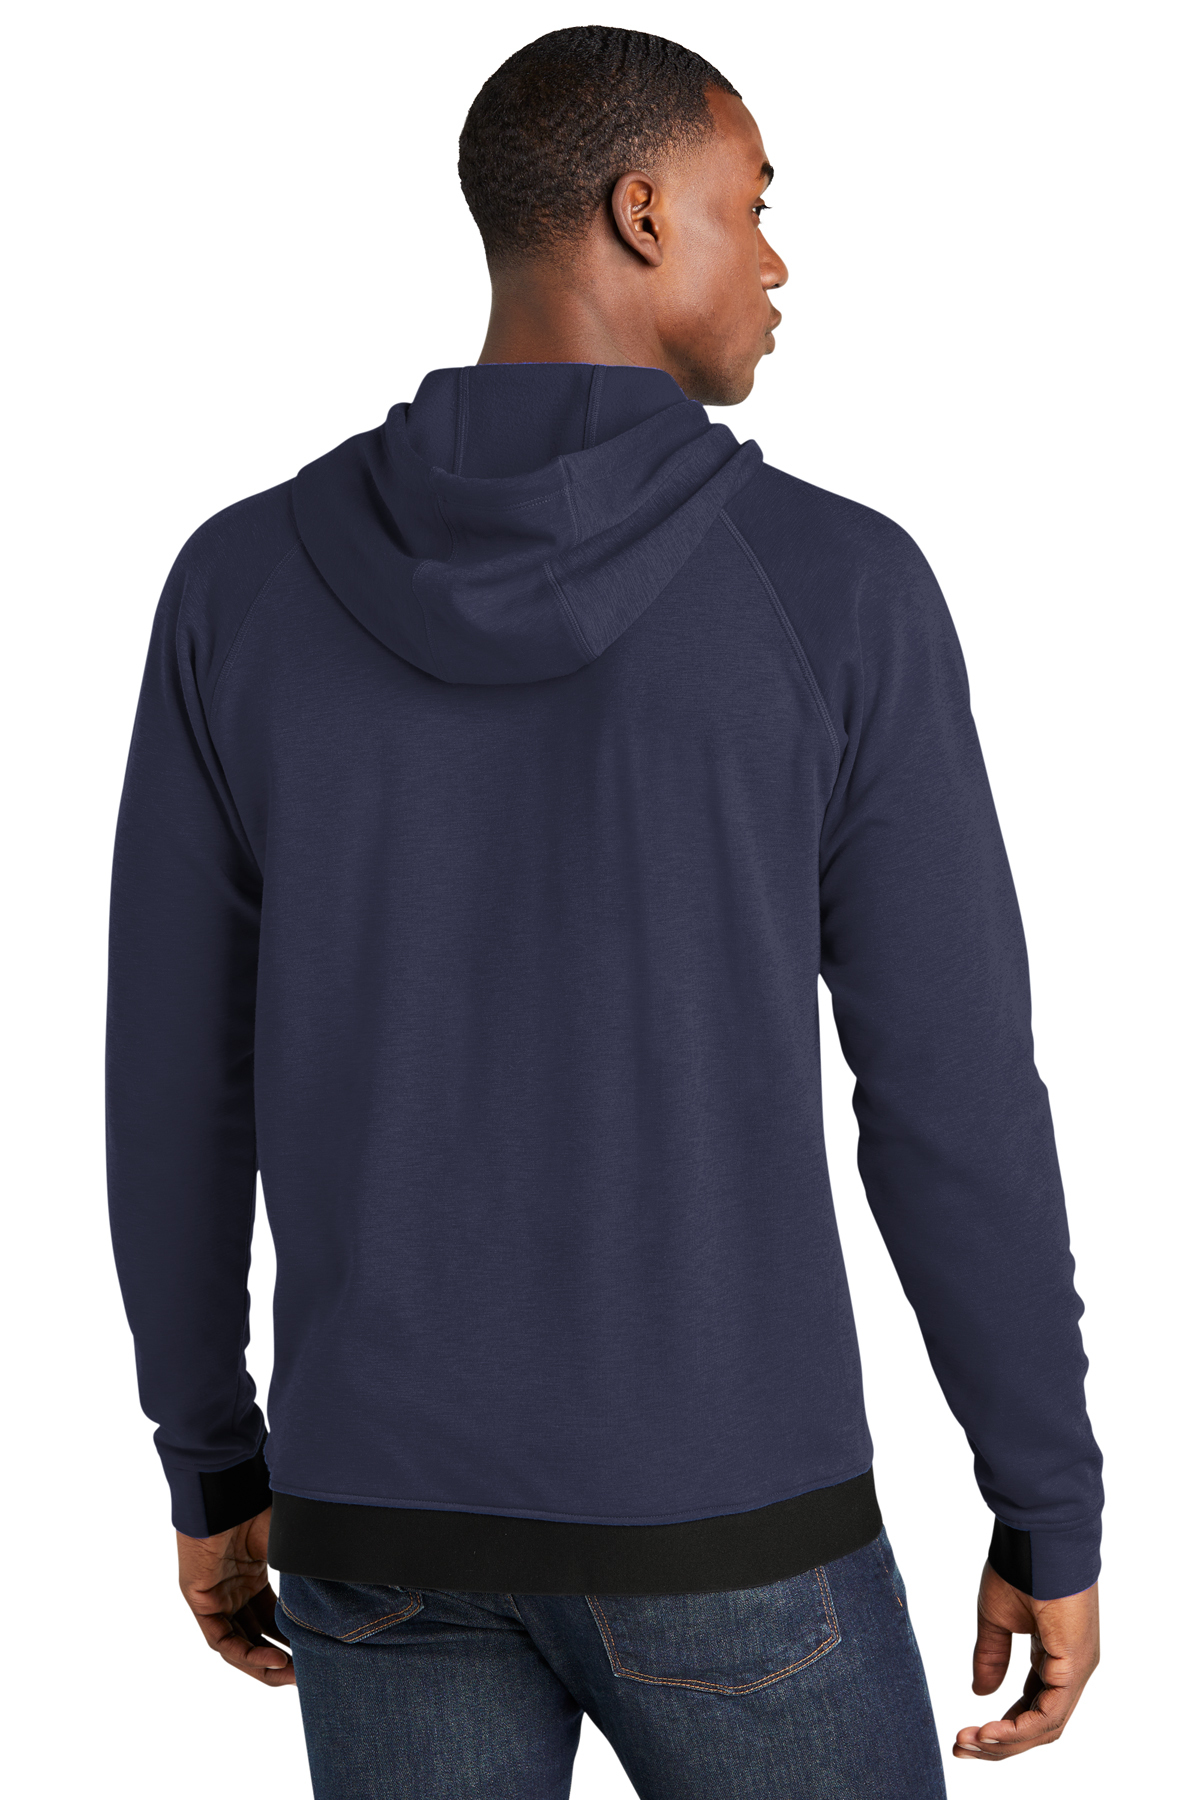 Sport-Tek PosiCharge Strive Hooded Pullover | Product | Sport-Tek